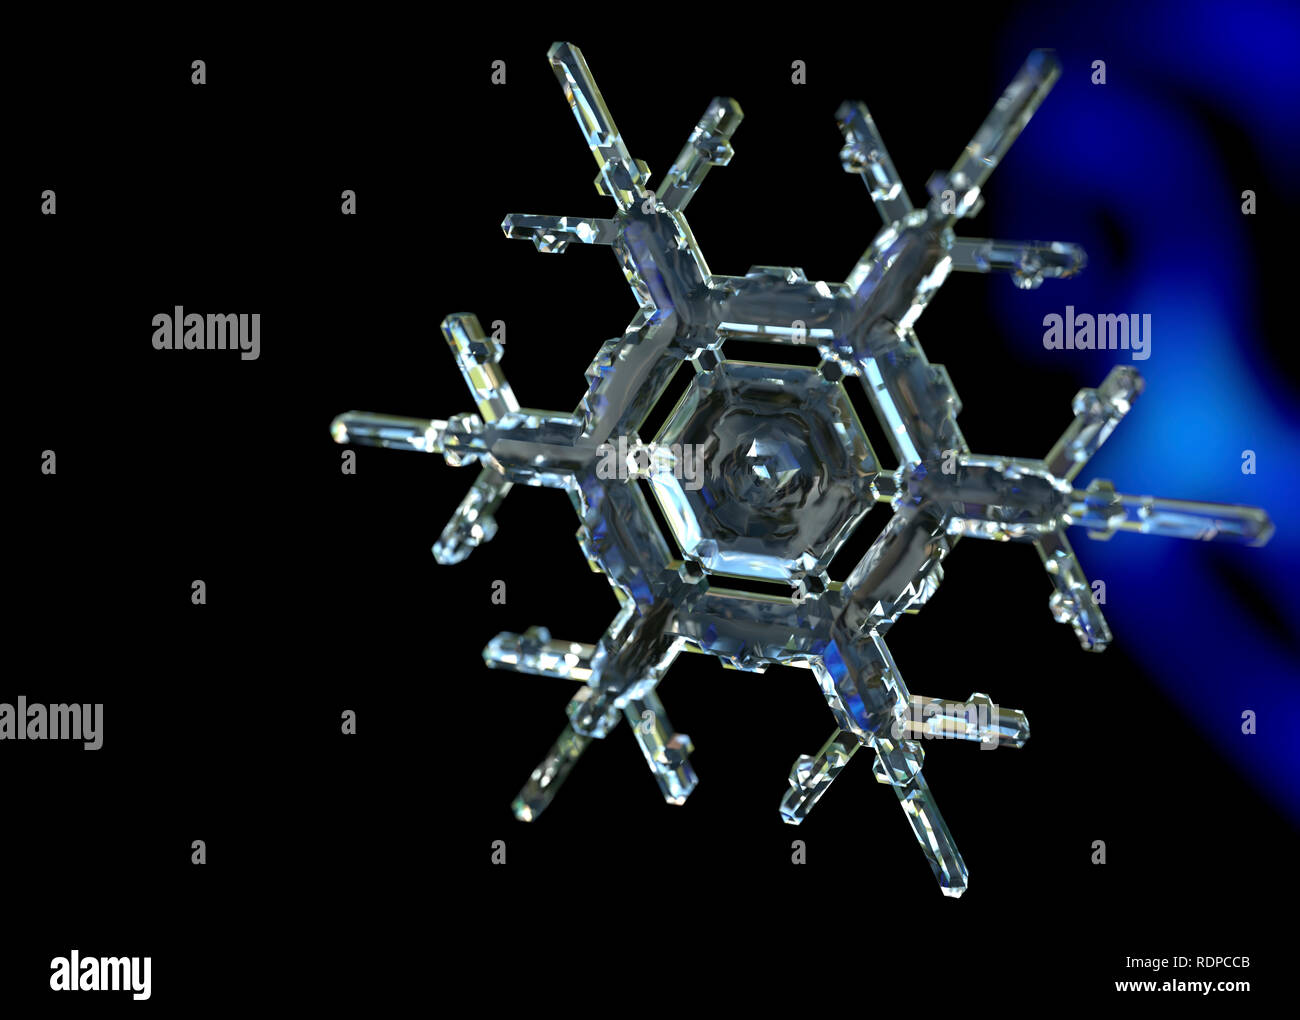 Snowflake contra un fondo oscuro, ilustración. Foto de stock